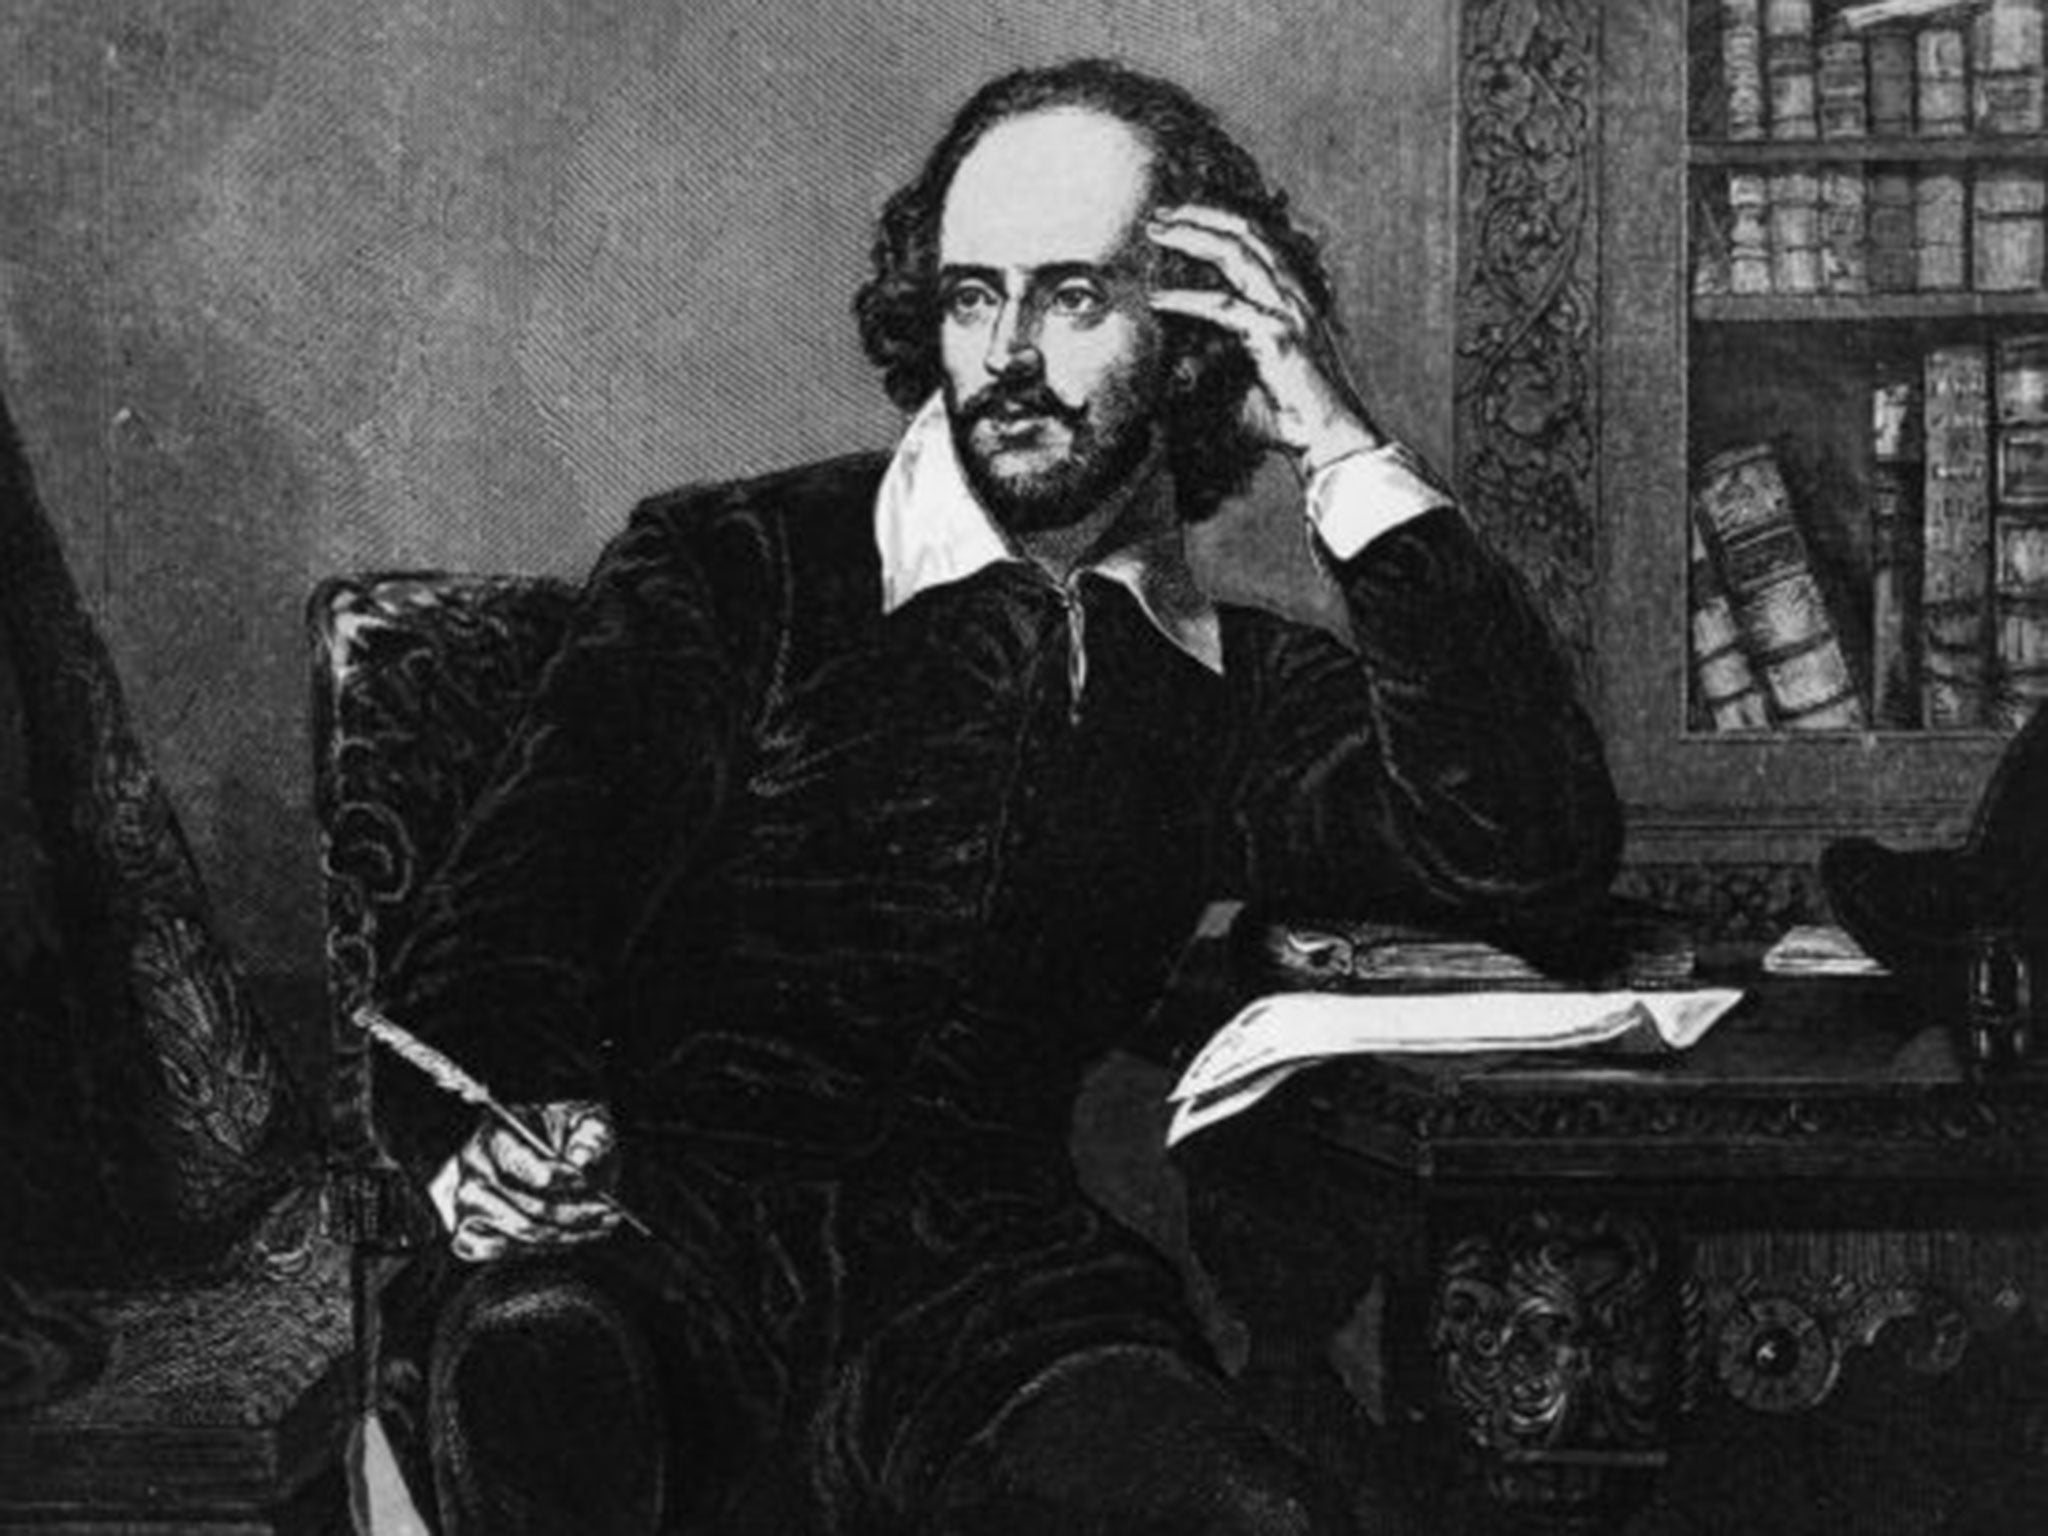 Bard act to follow: Shakespeare 